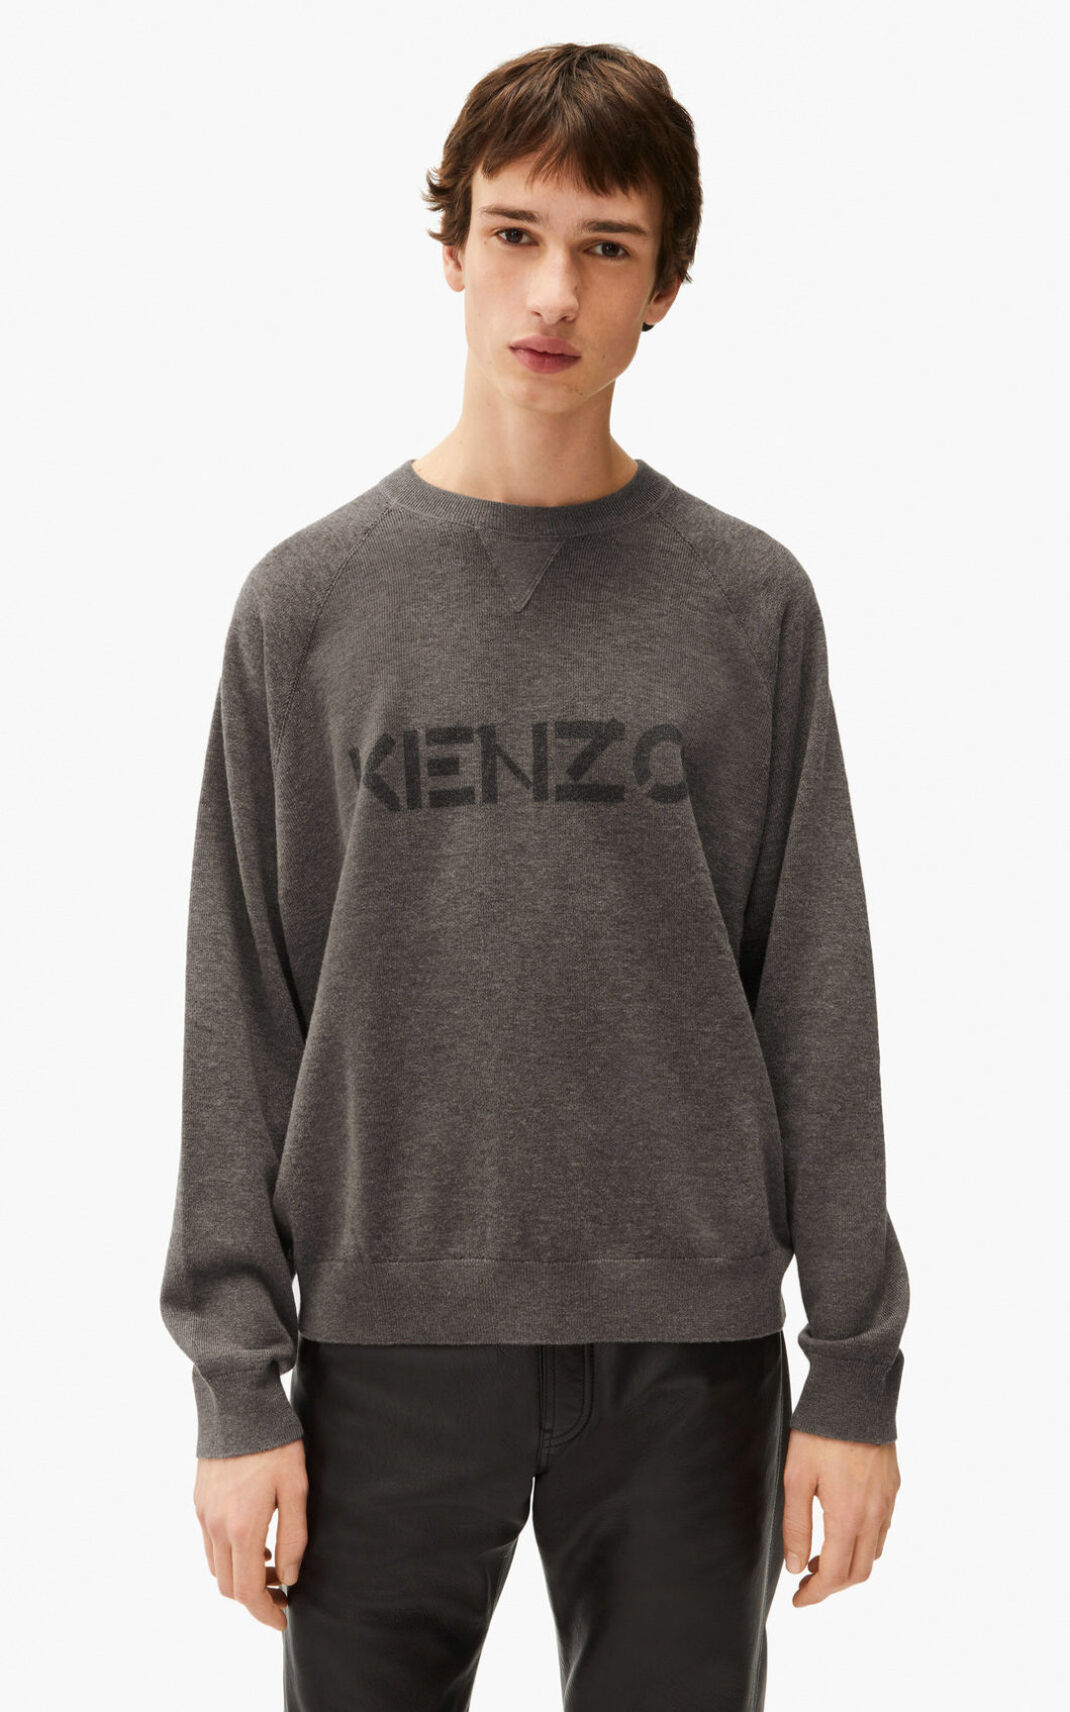 Kenzo logo セーター メンズ ブラウン - HVPFJE168